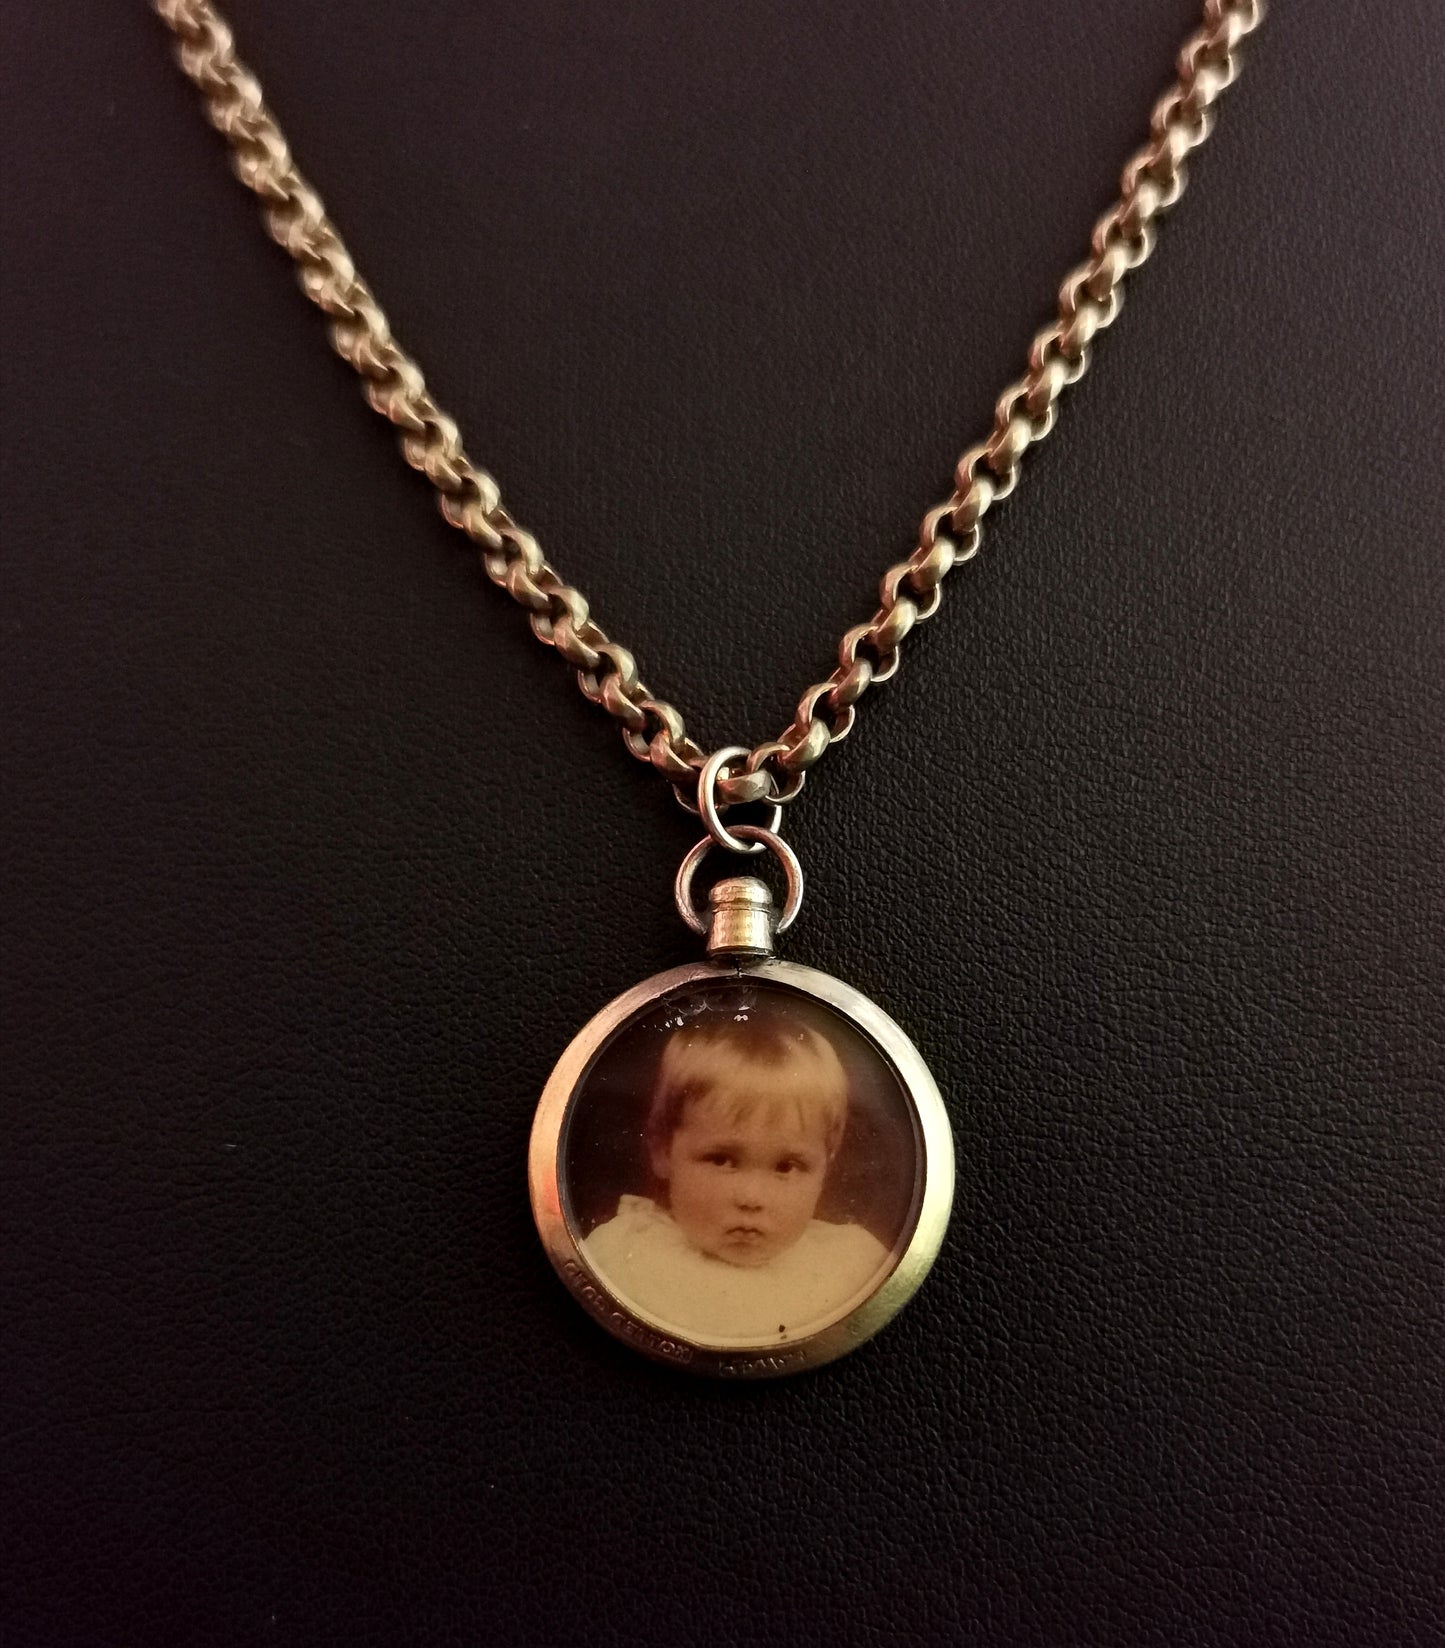 Antique rolled gold portrait locket, belcher chain necklace